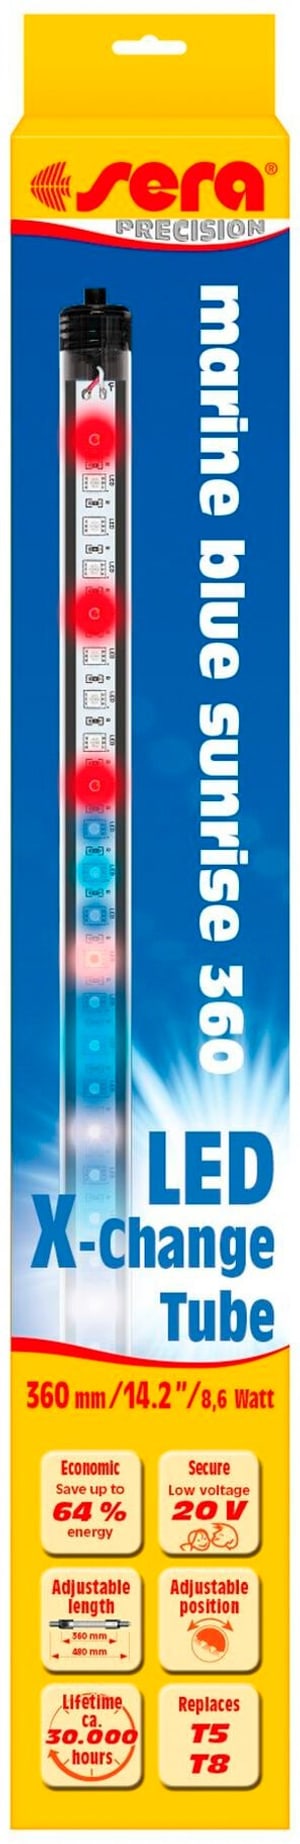 Ampoule LED X-Change Tube MBS, 360 mm